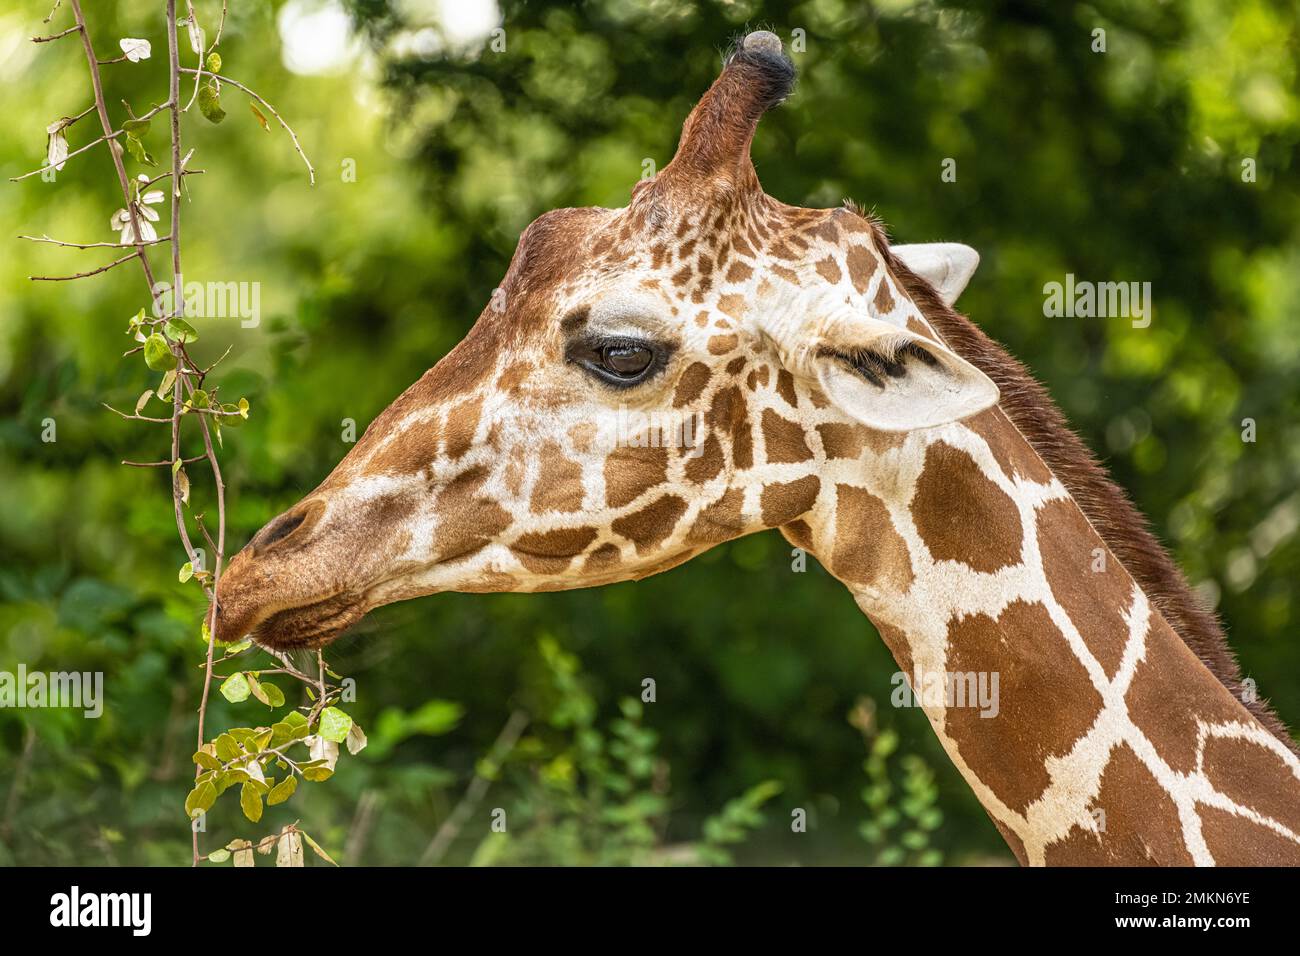 Giraffe (Giraffa camelopardalis) eating leaves at the Zoo Atlanta African Savanna habitat in Atlanta, Georgia. (USA) Stock Photo